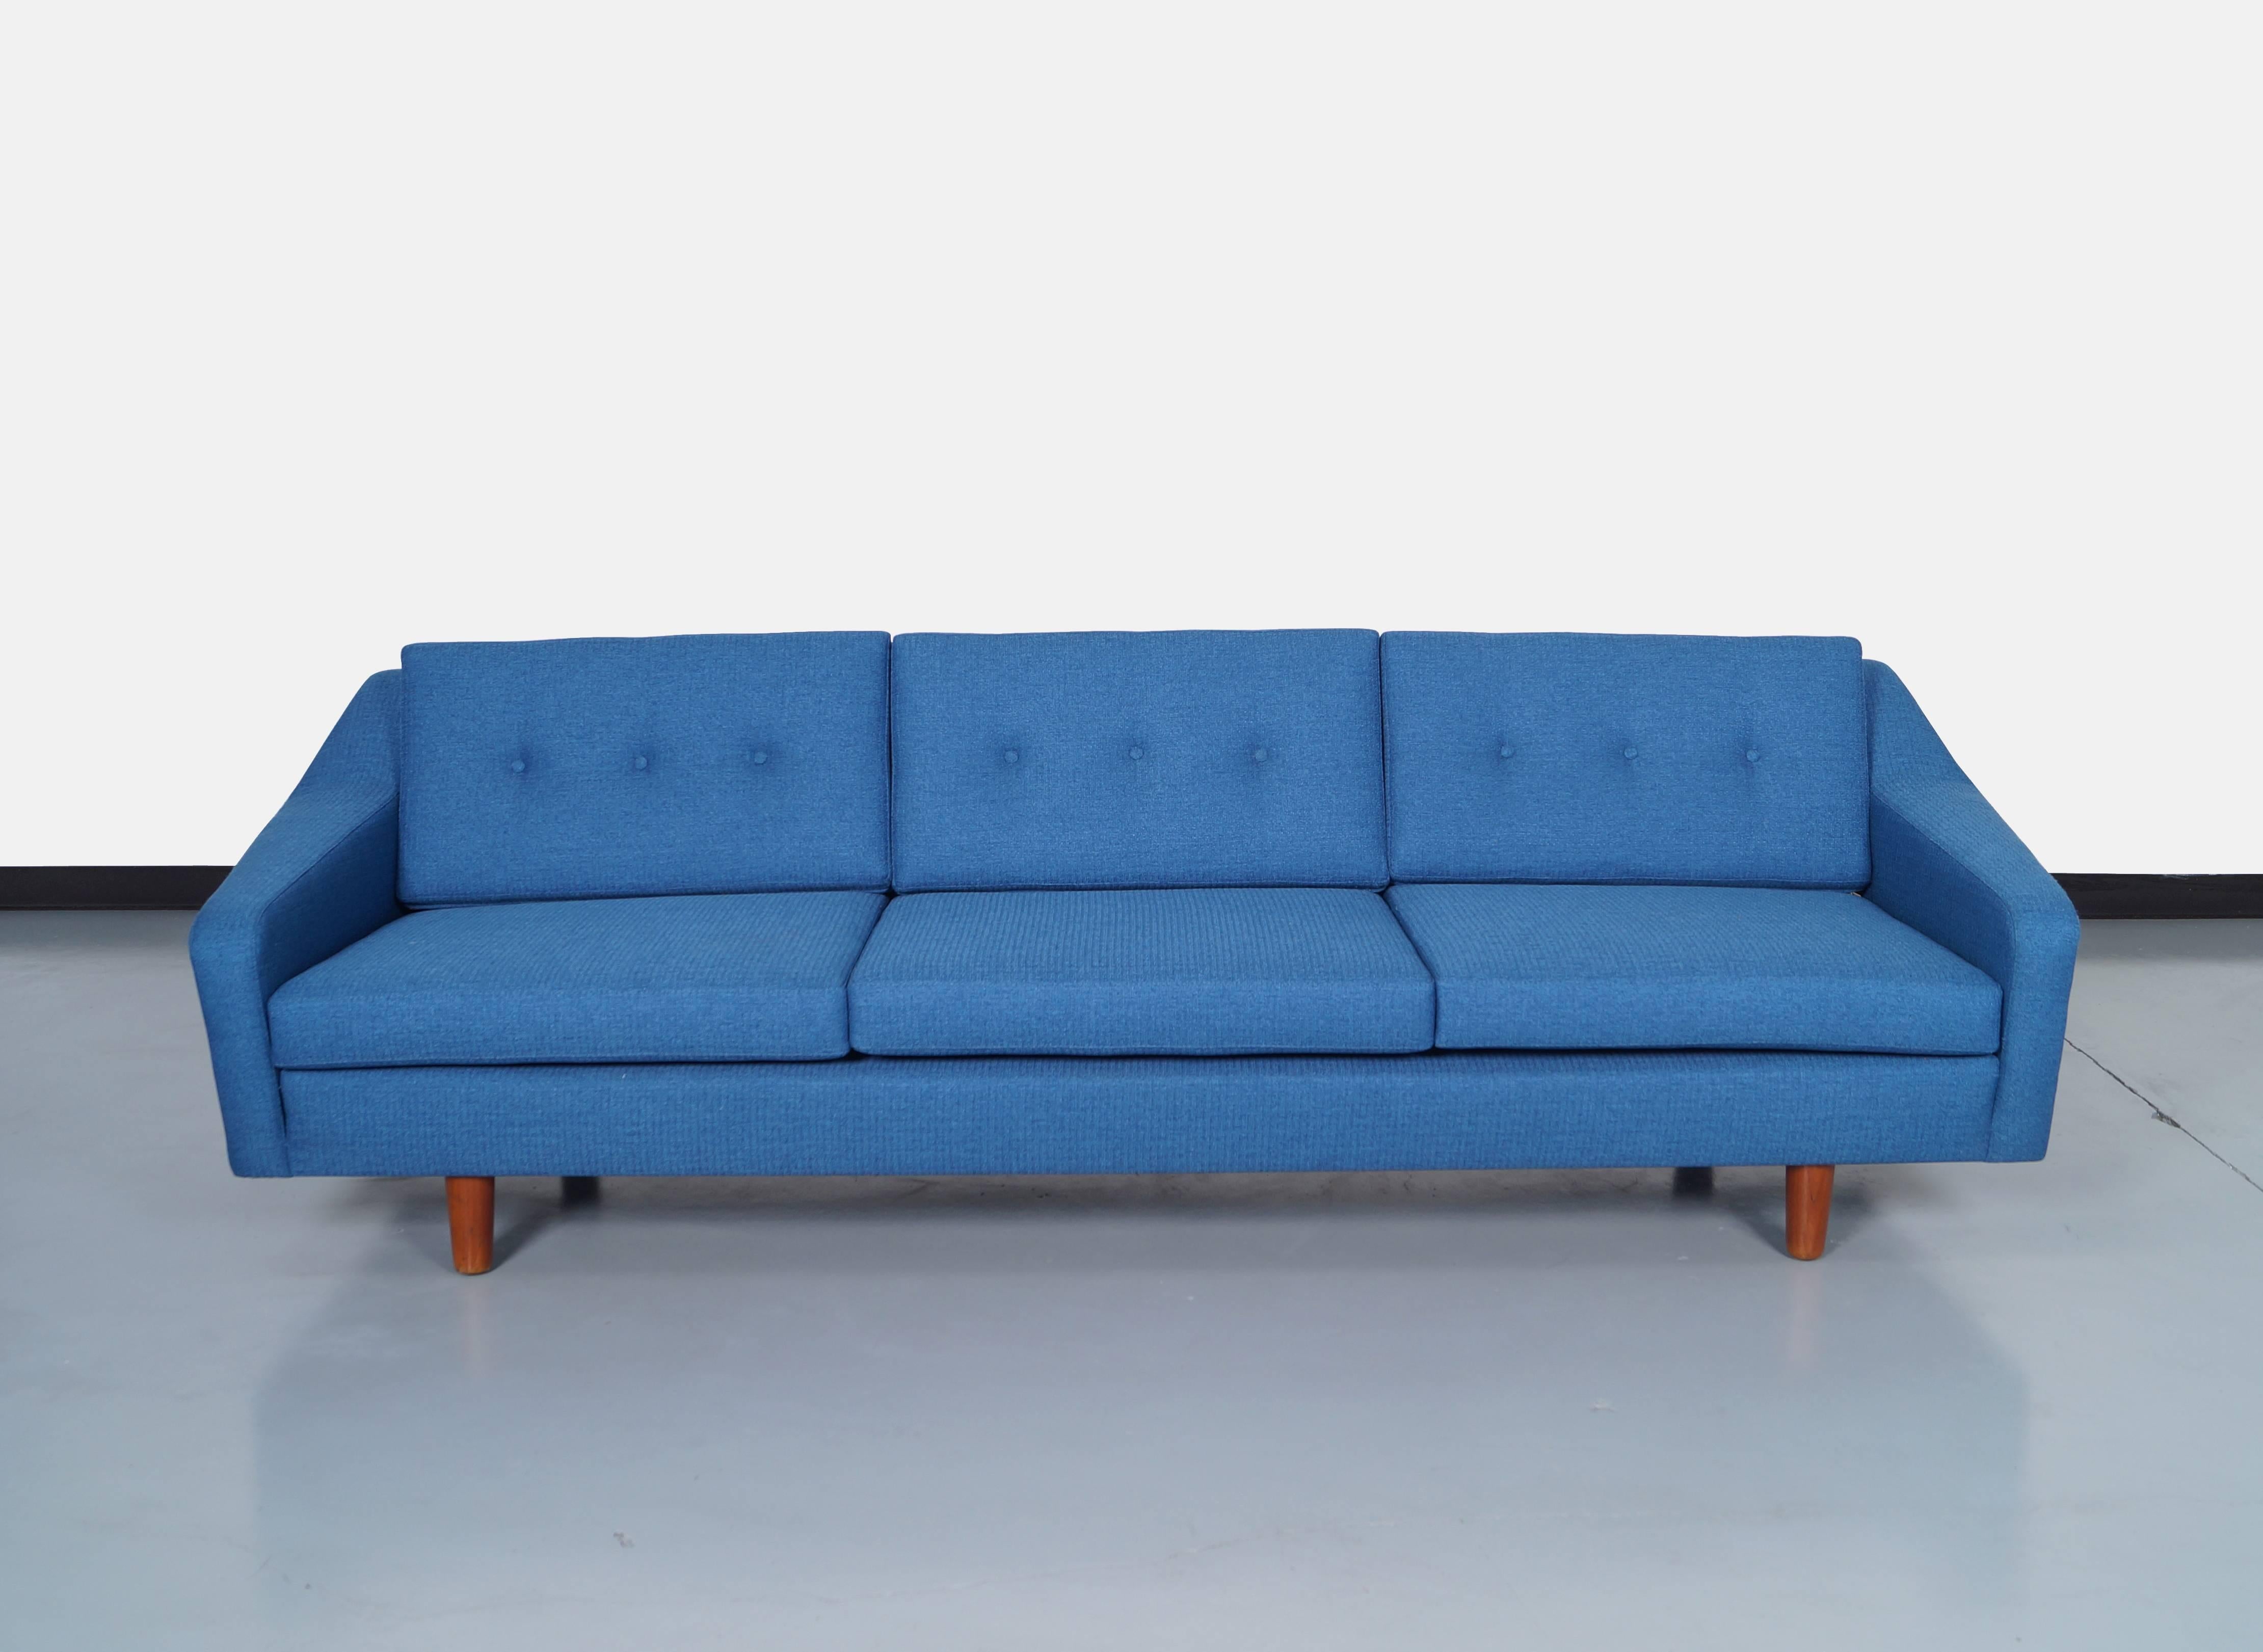 Danish modern sofa designed by Illums Bolighus. Features a sculptural armrest with an elegant design.